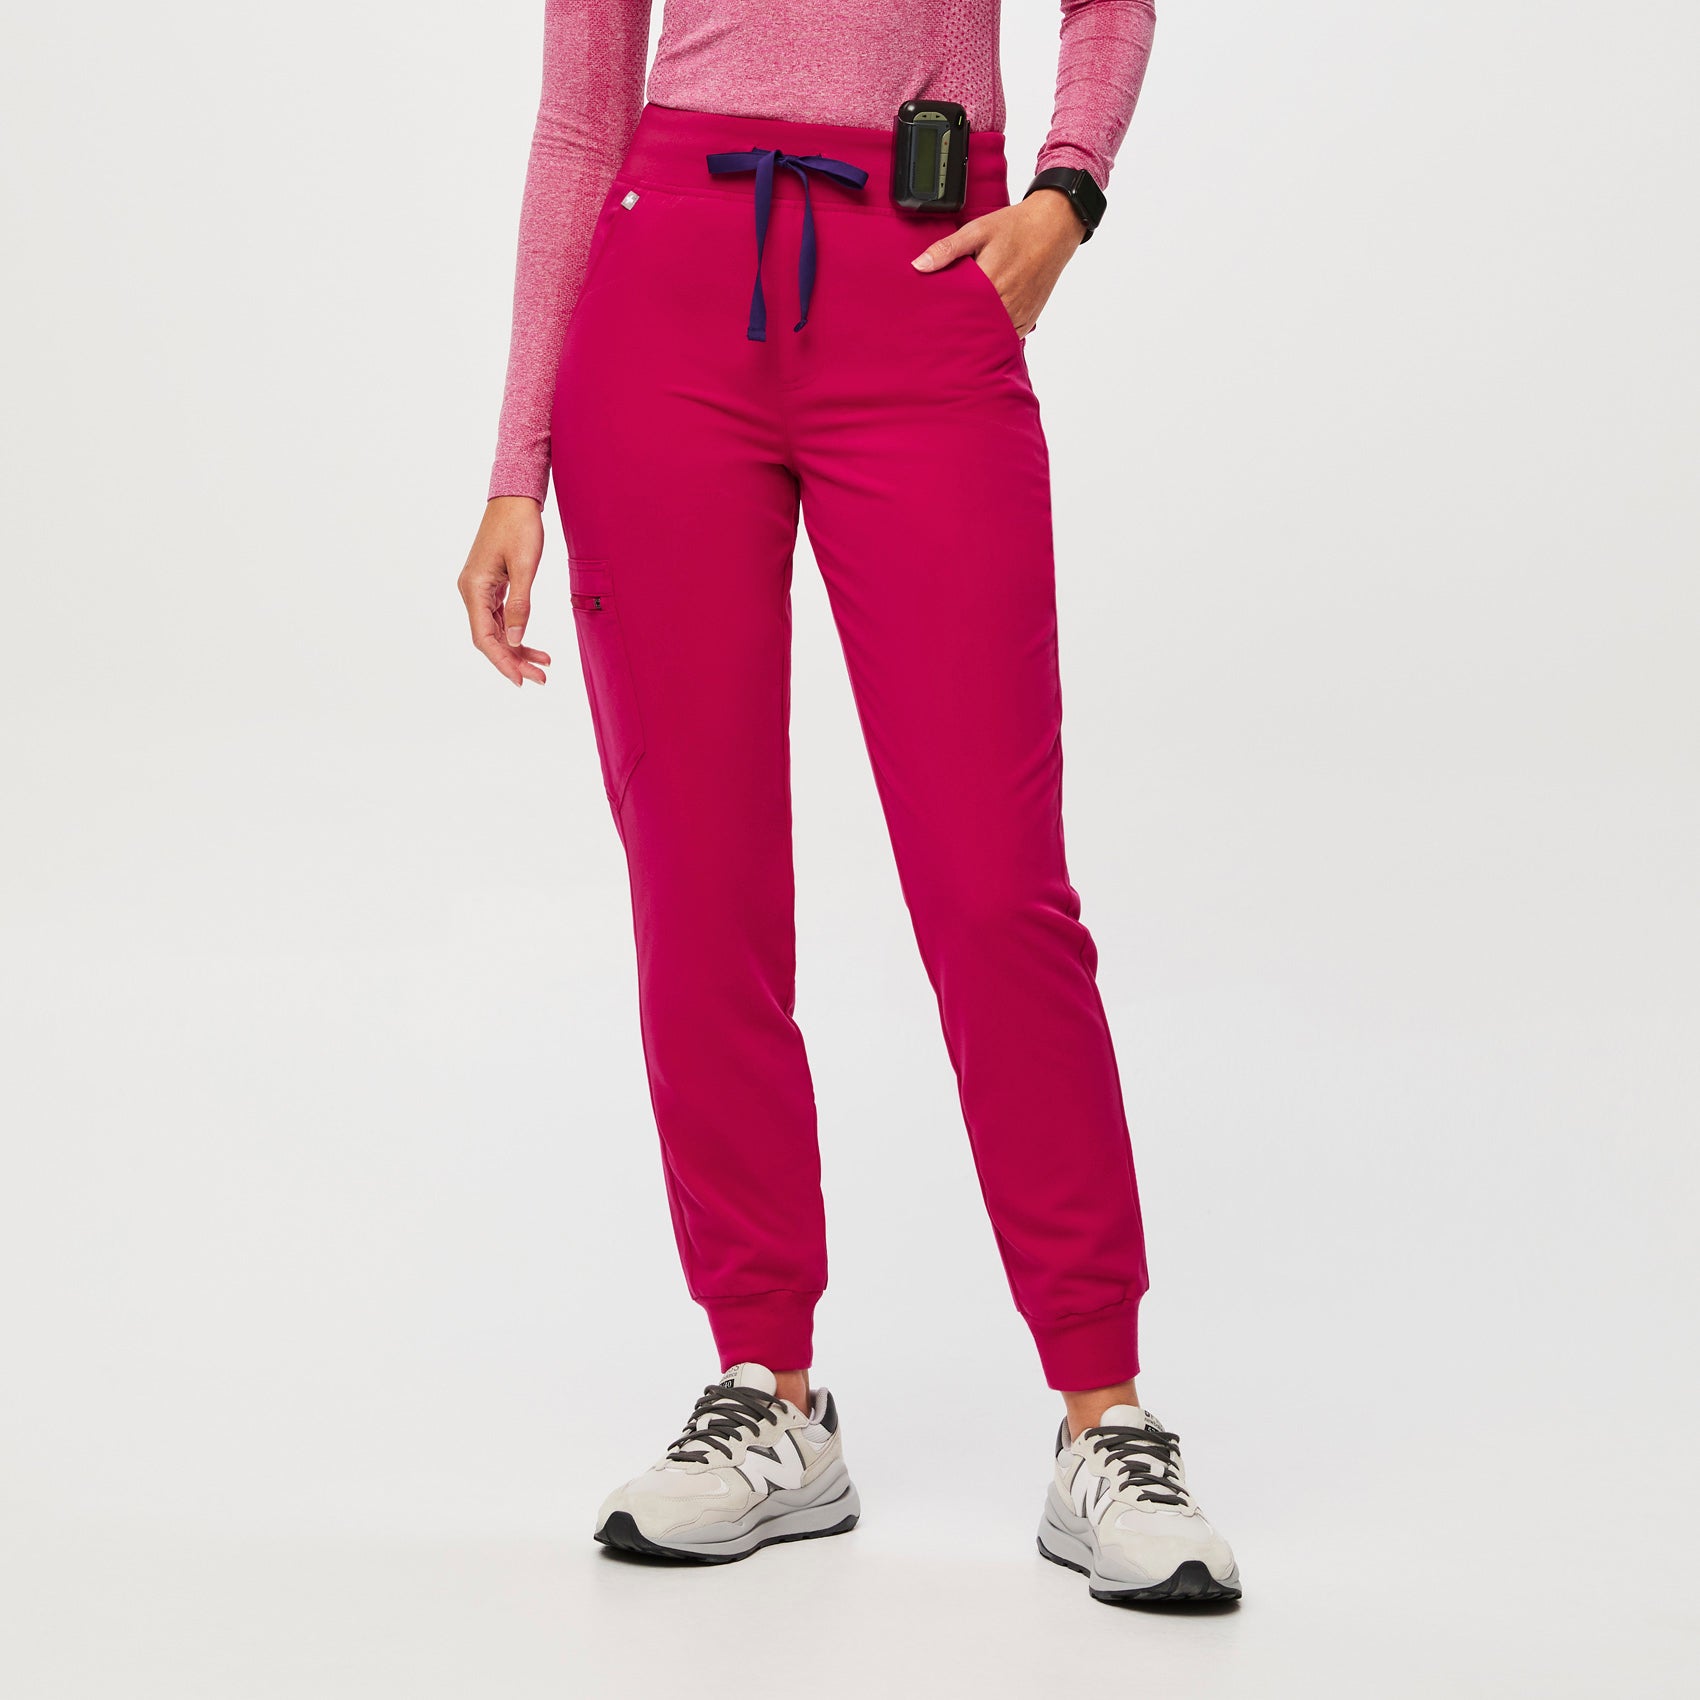 Pantalones deportivos de uniforme médico cintura alta Zamora™ para mujer -  Rosa ultra · FIGS